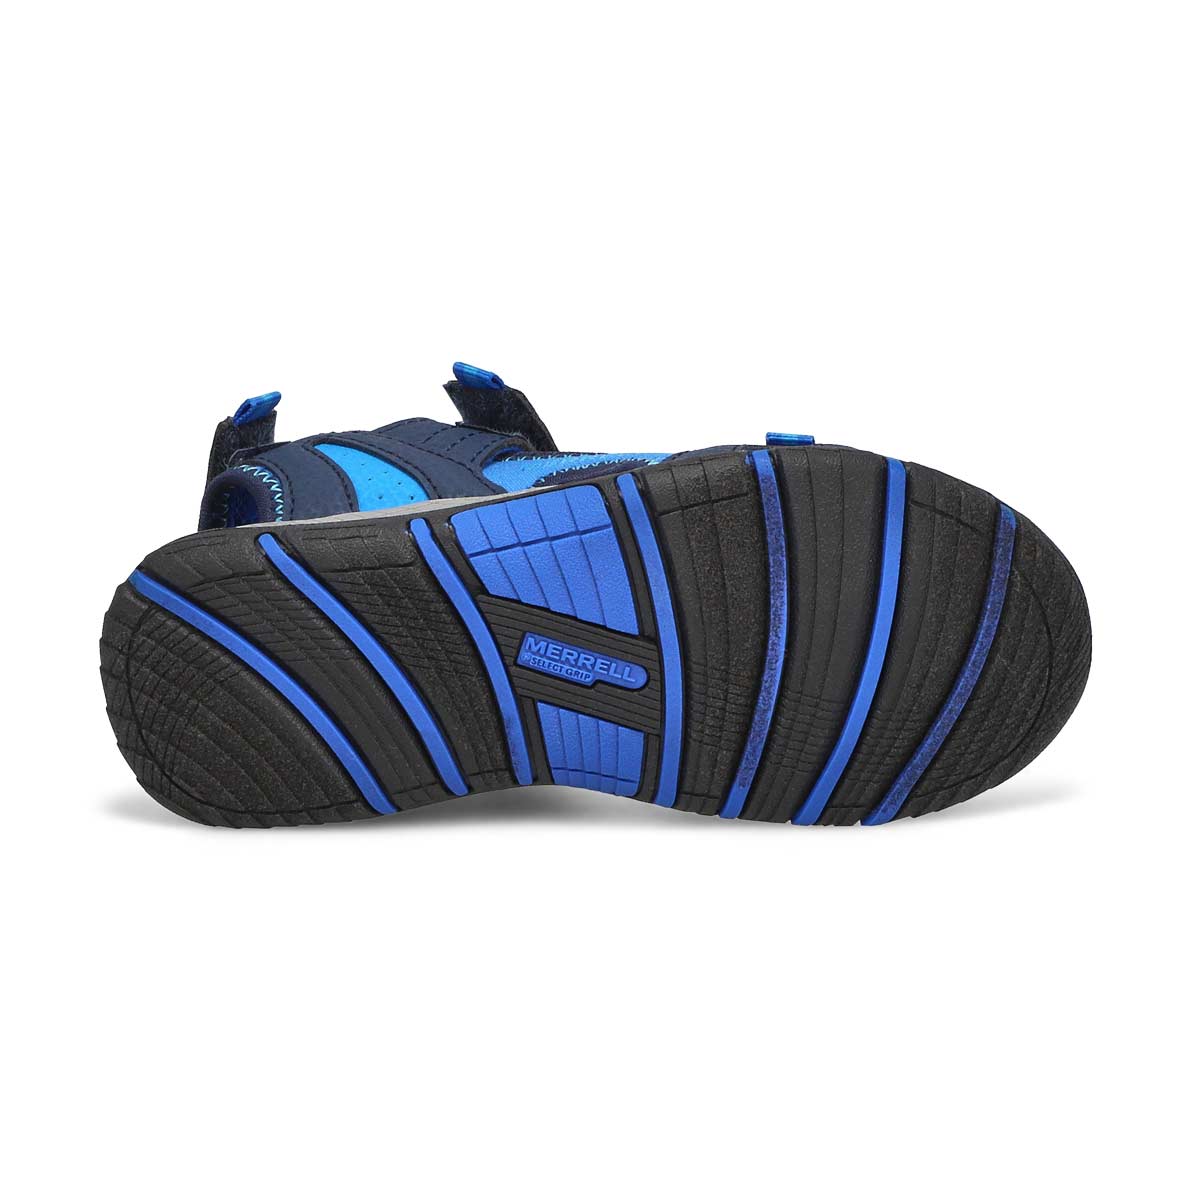 Sandale sport PANTHER 2.0, marine, garçons